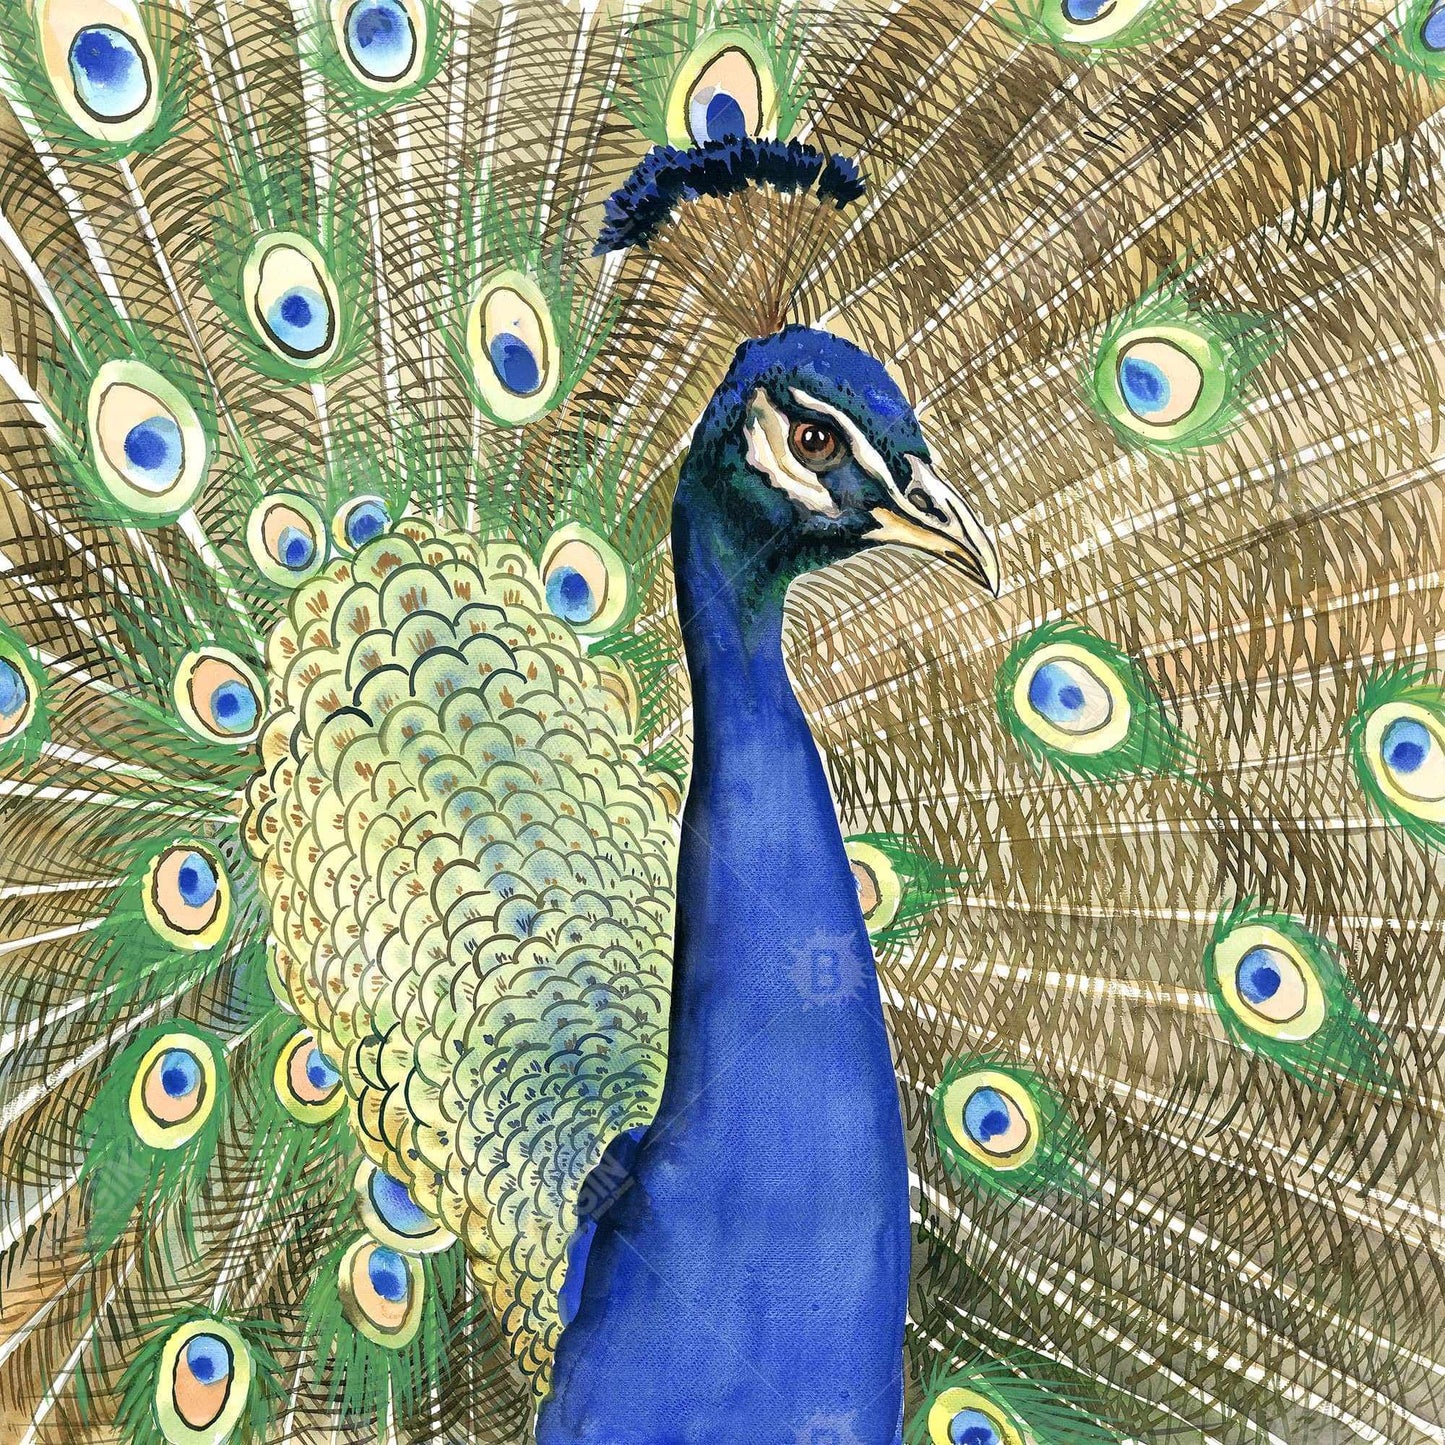 Peacock - 32x32 Print on canvas